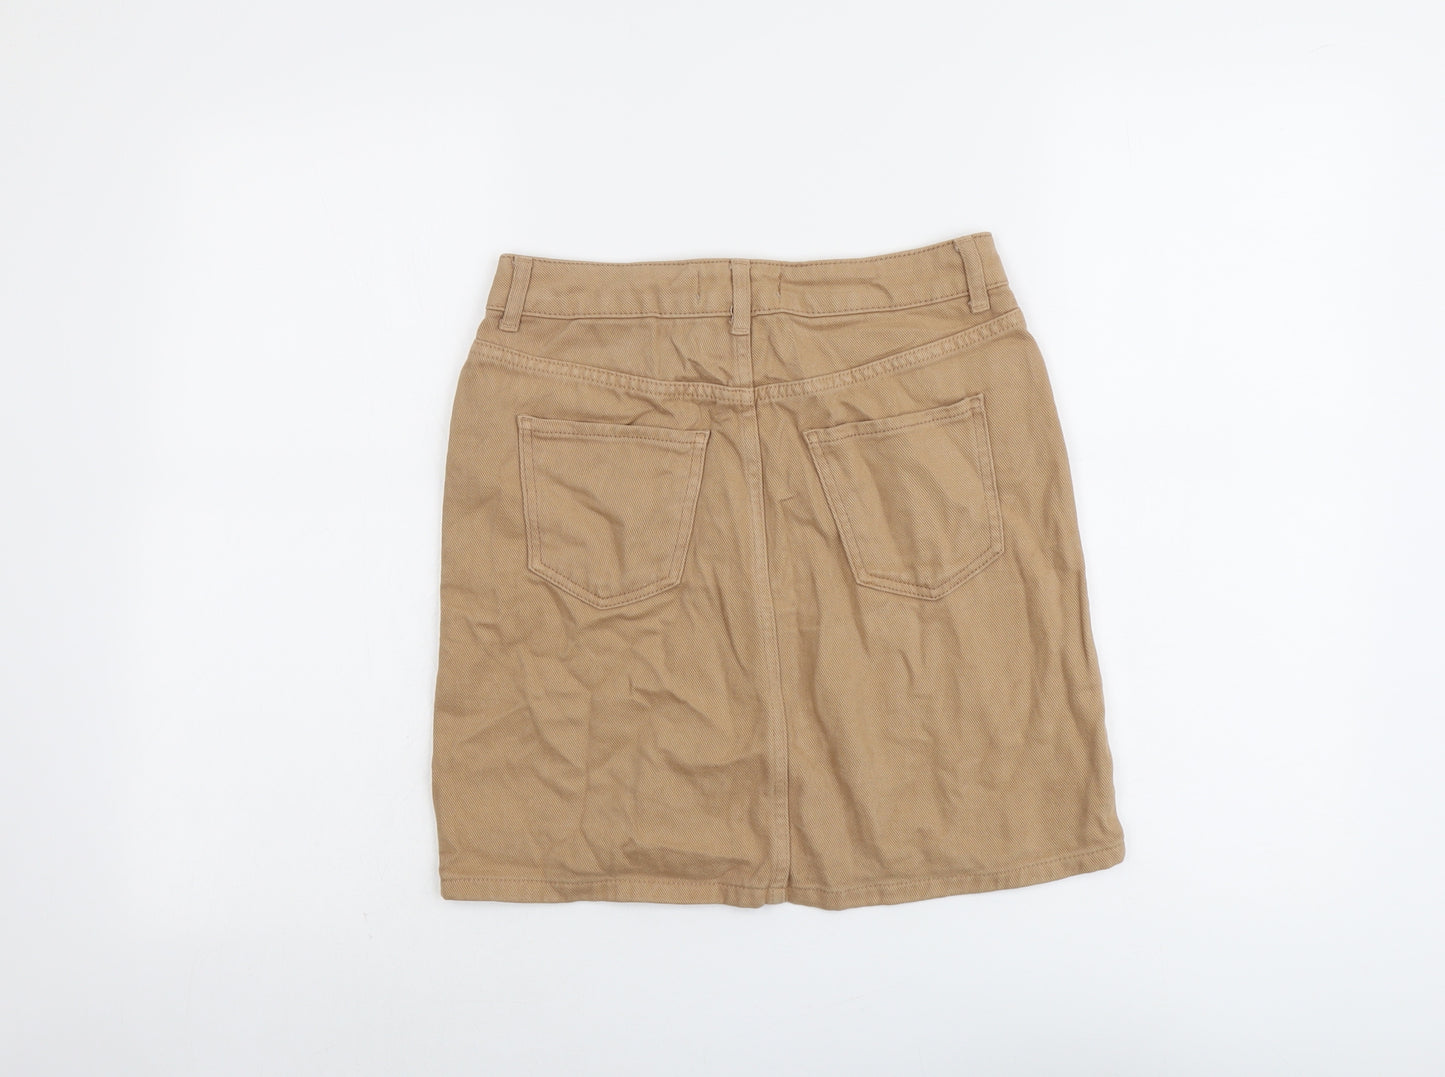 New Look Womens Beige Cotton A-Line Skirt Size 8 Button